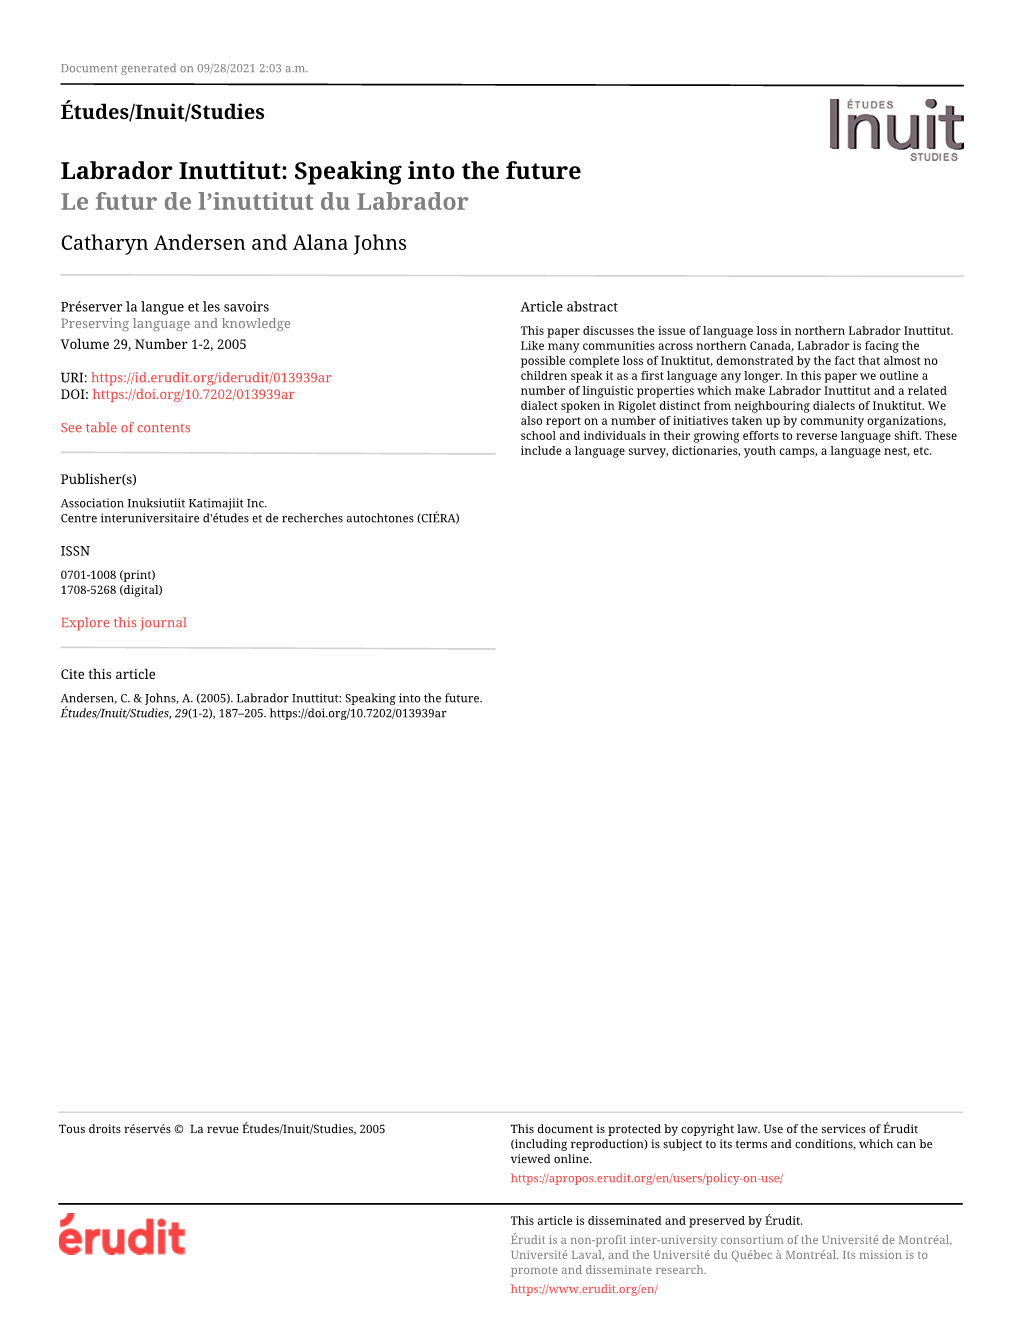 Labrador Inuttitut: Speaking Into the Future Le Futur De L’Inuttitut Du Labrador Catharyn Andersen and Alana Johns